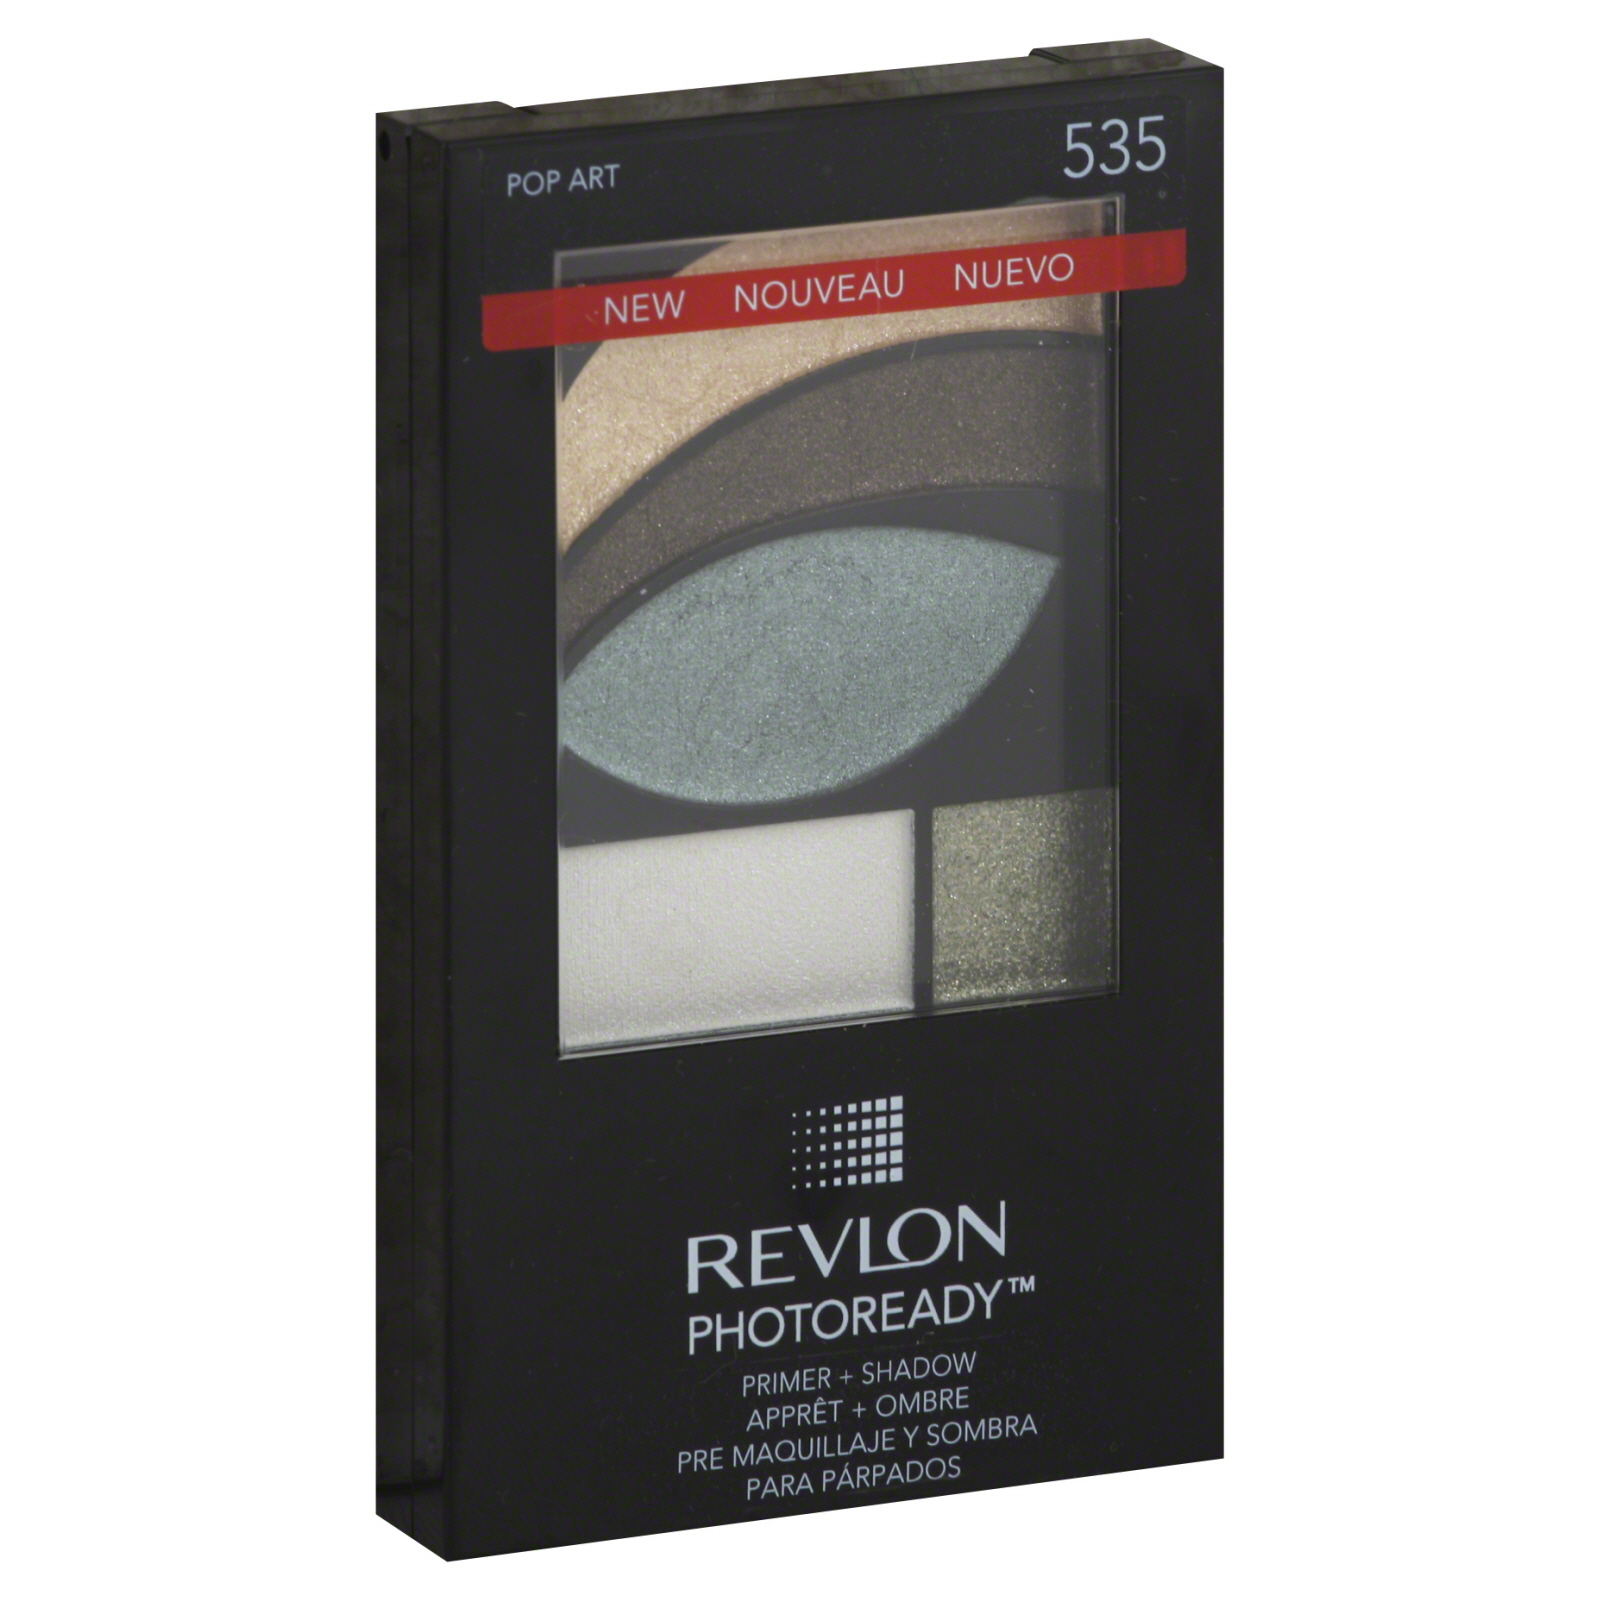 Revlon Photoready Primer + Shadow Eyeshadow